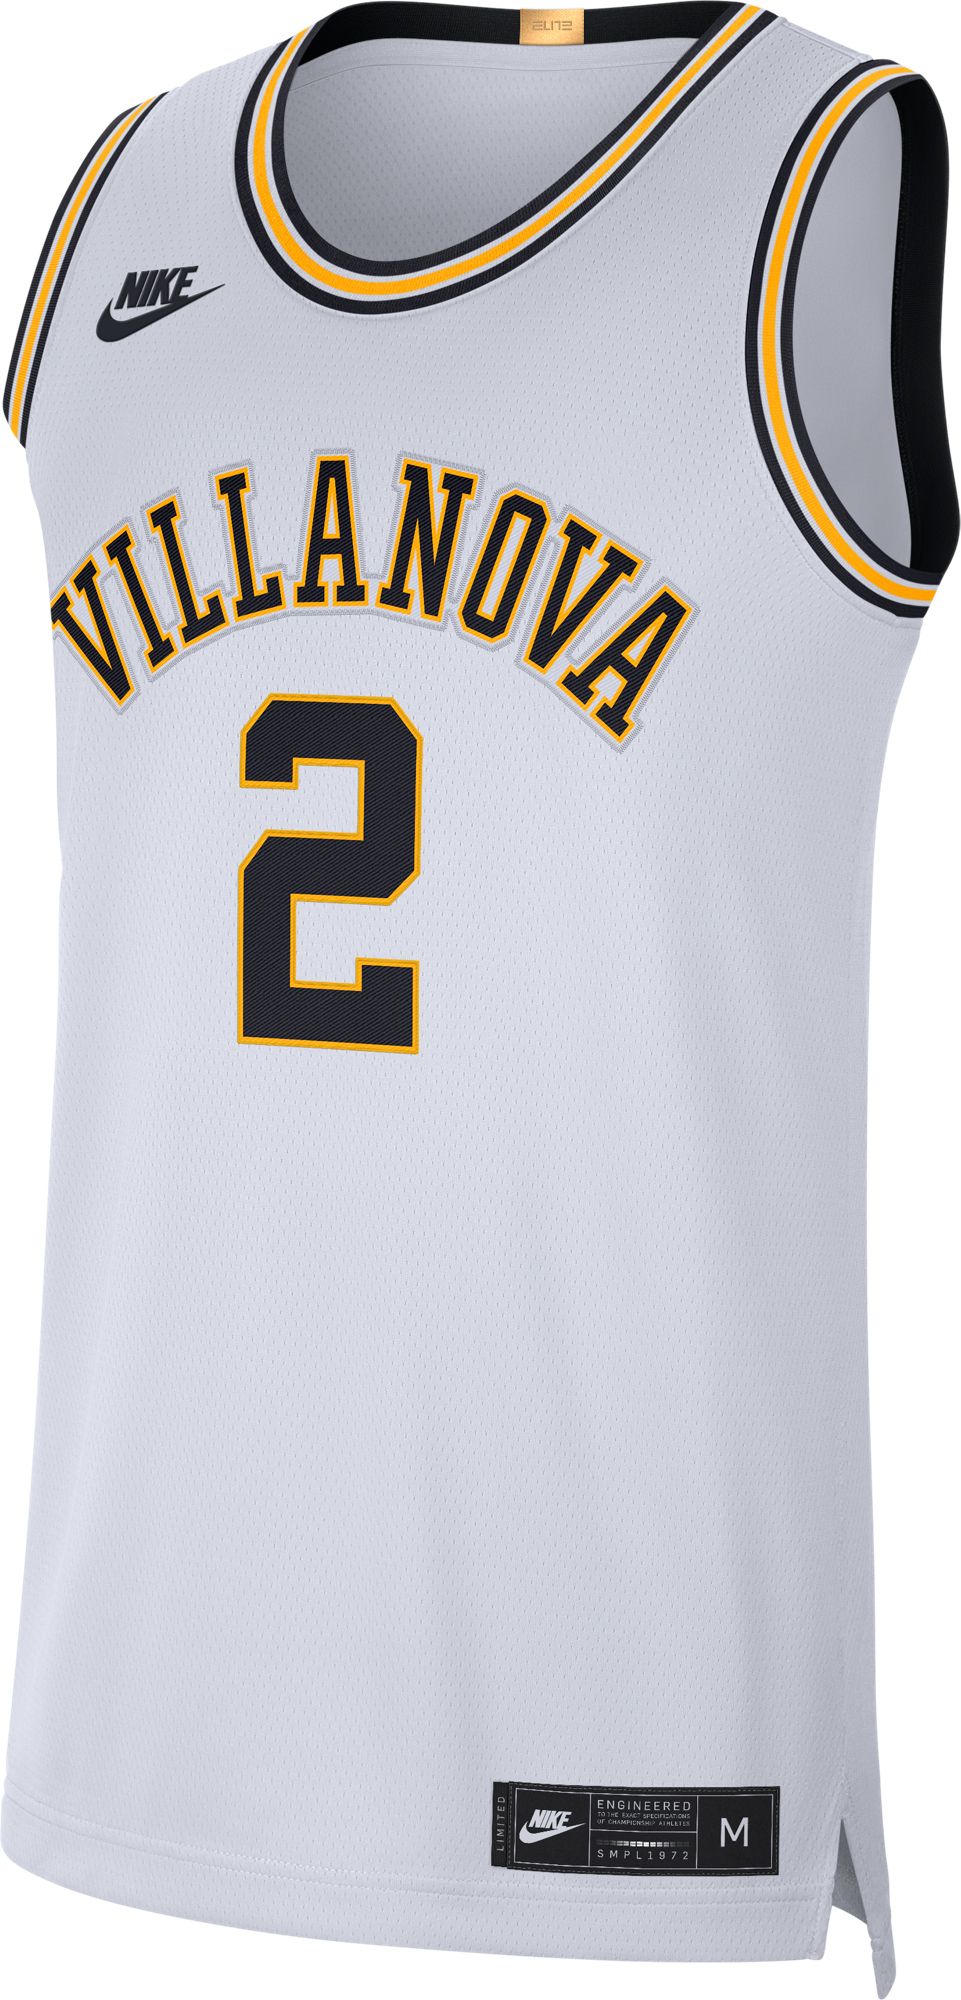 Villanova Wildcats soccer jersey